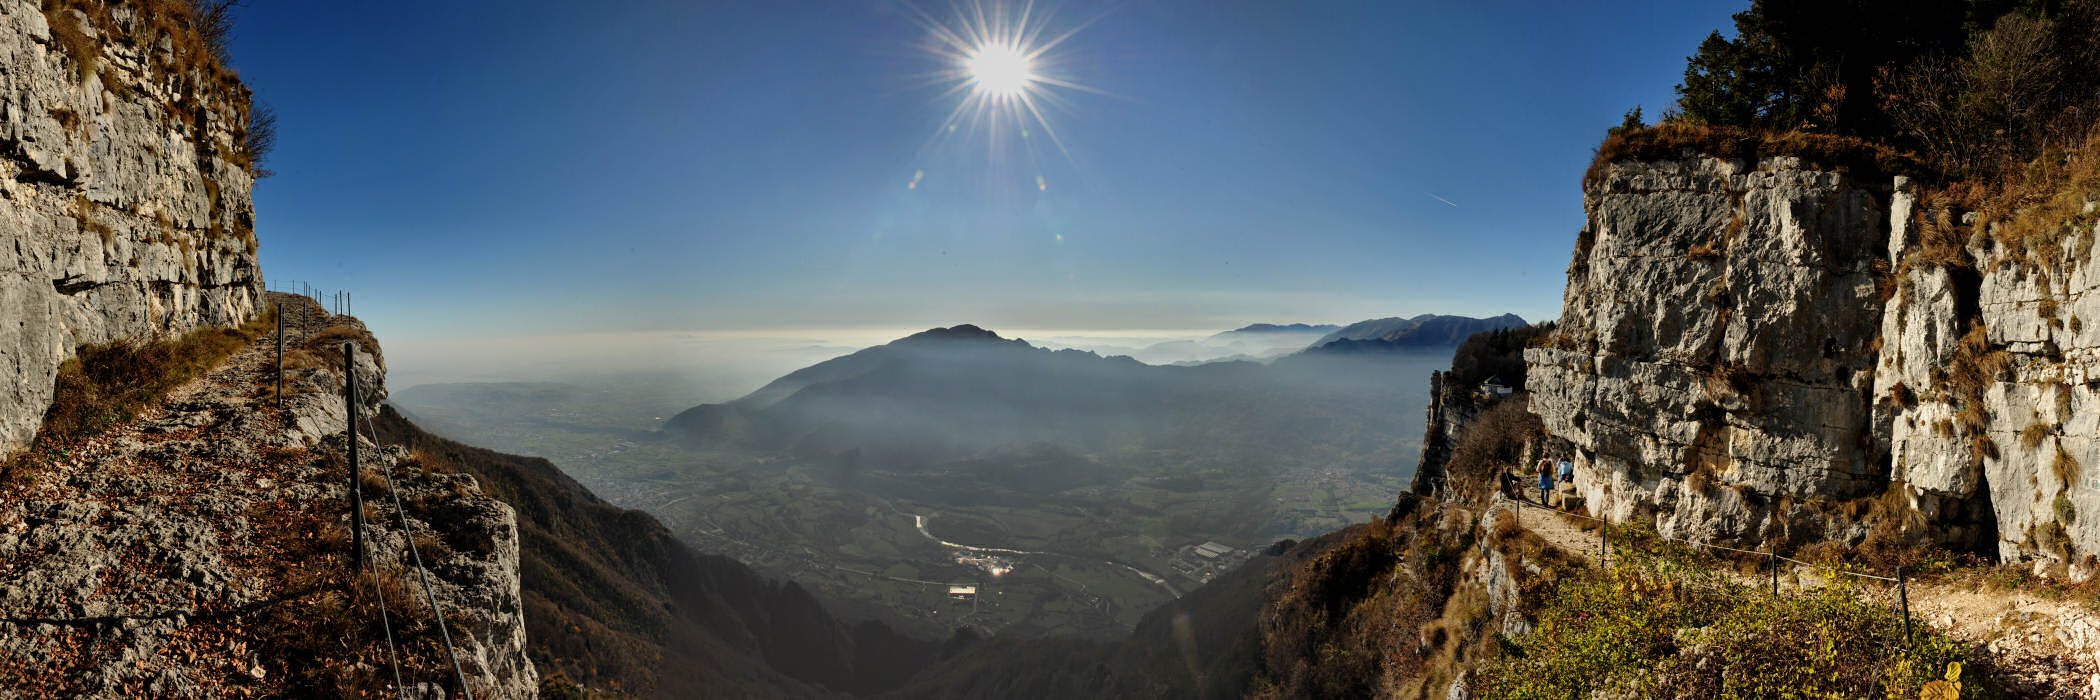 Monte Cengio - fotografia panoramica